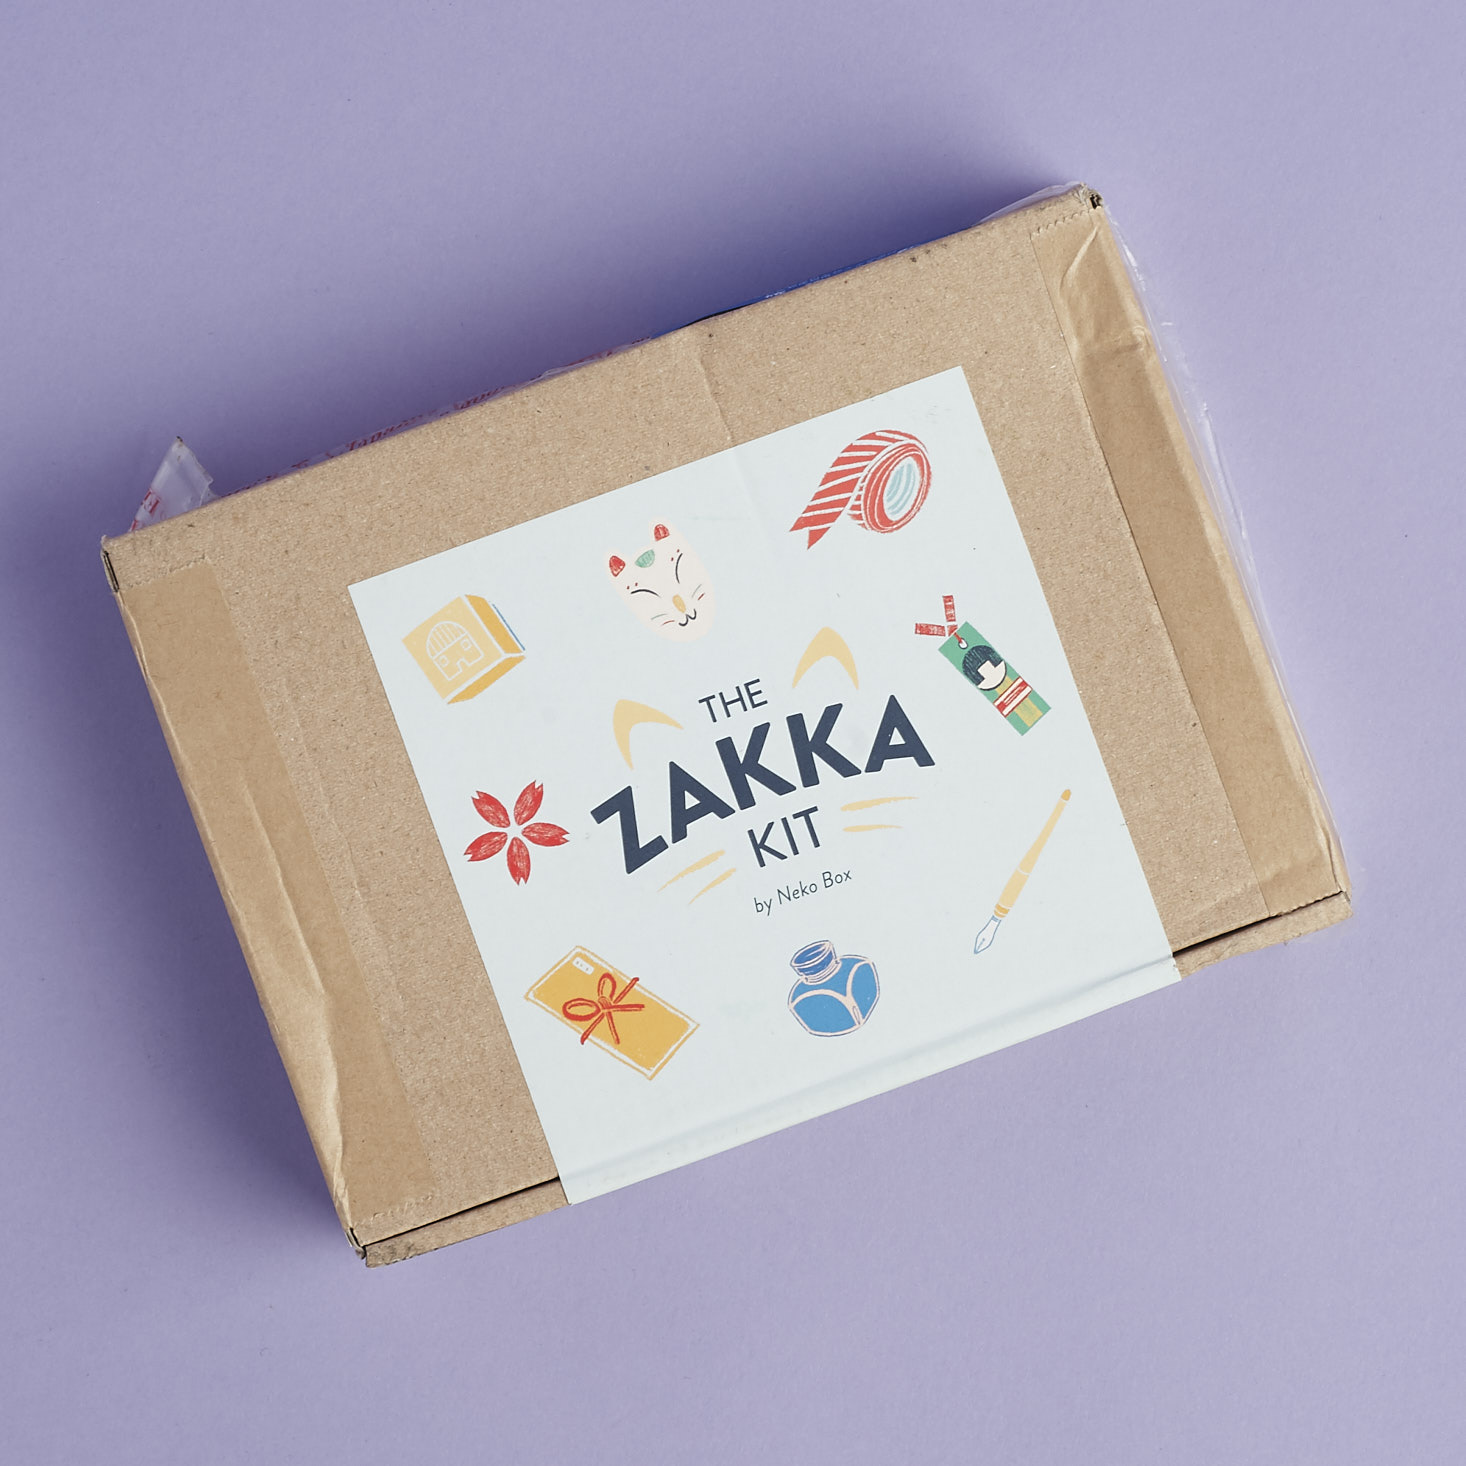 The Zakka Kit Stationery Review + Coupon – February 2018